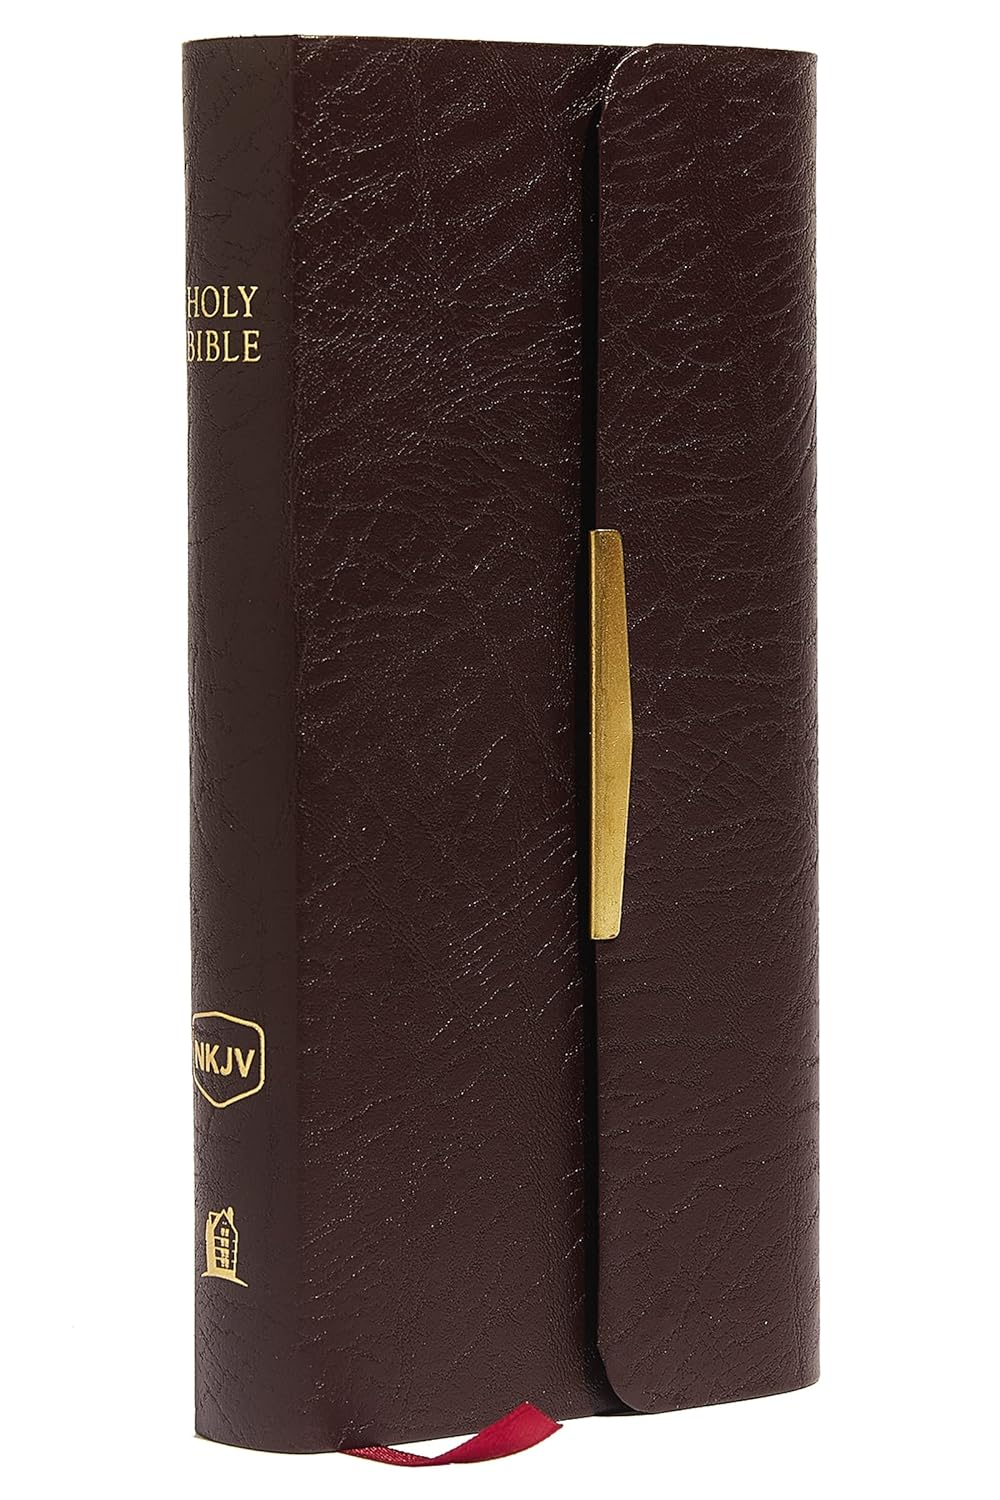 Nelson's Classic Companion NKJV Bible